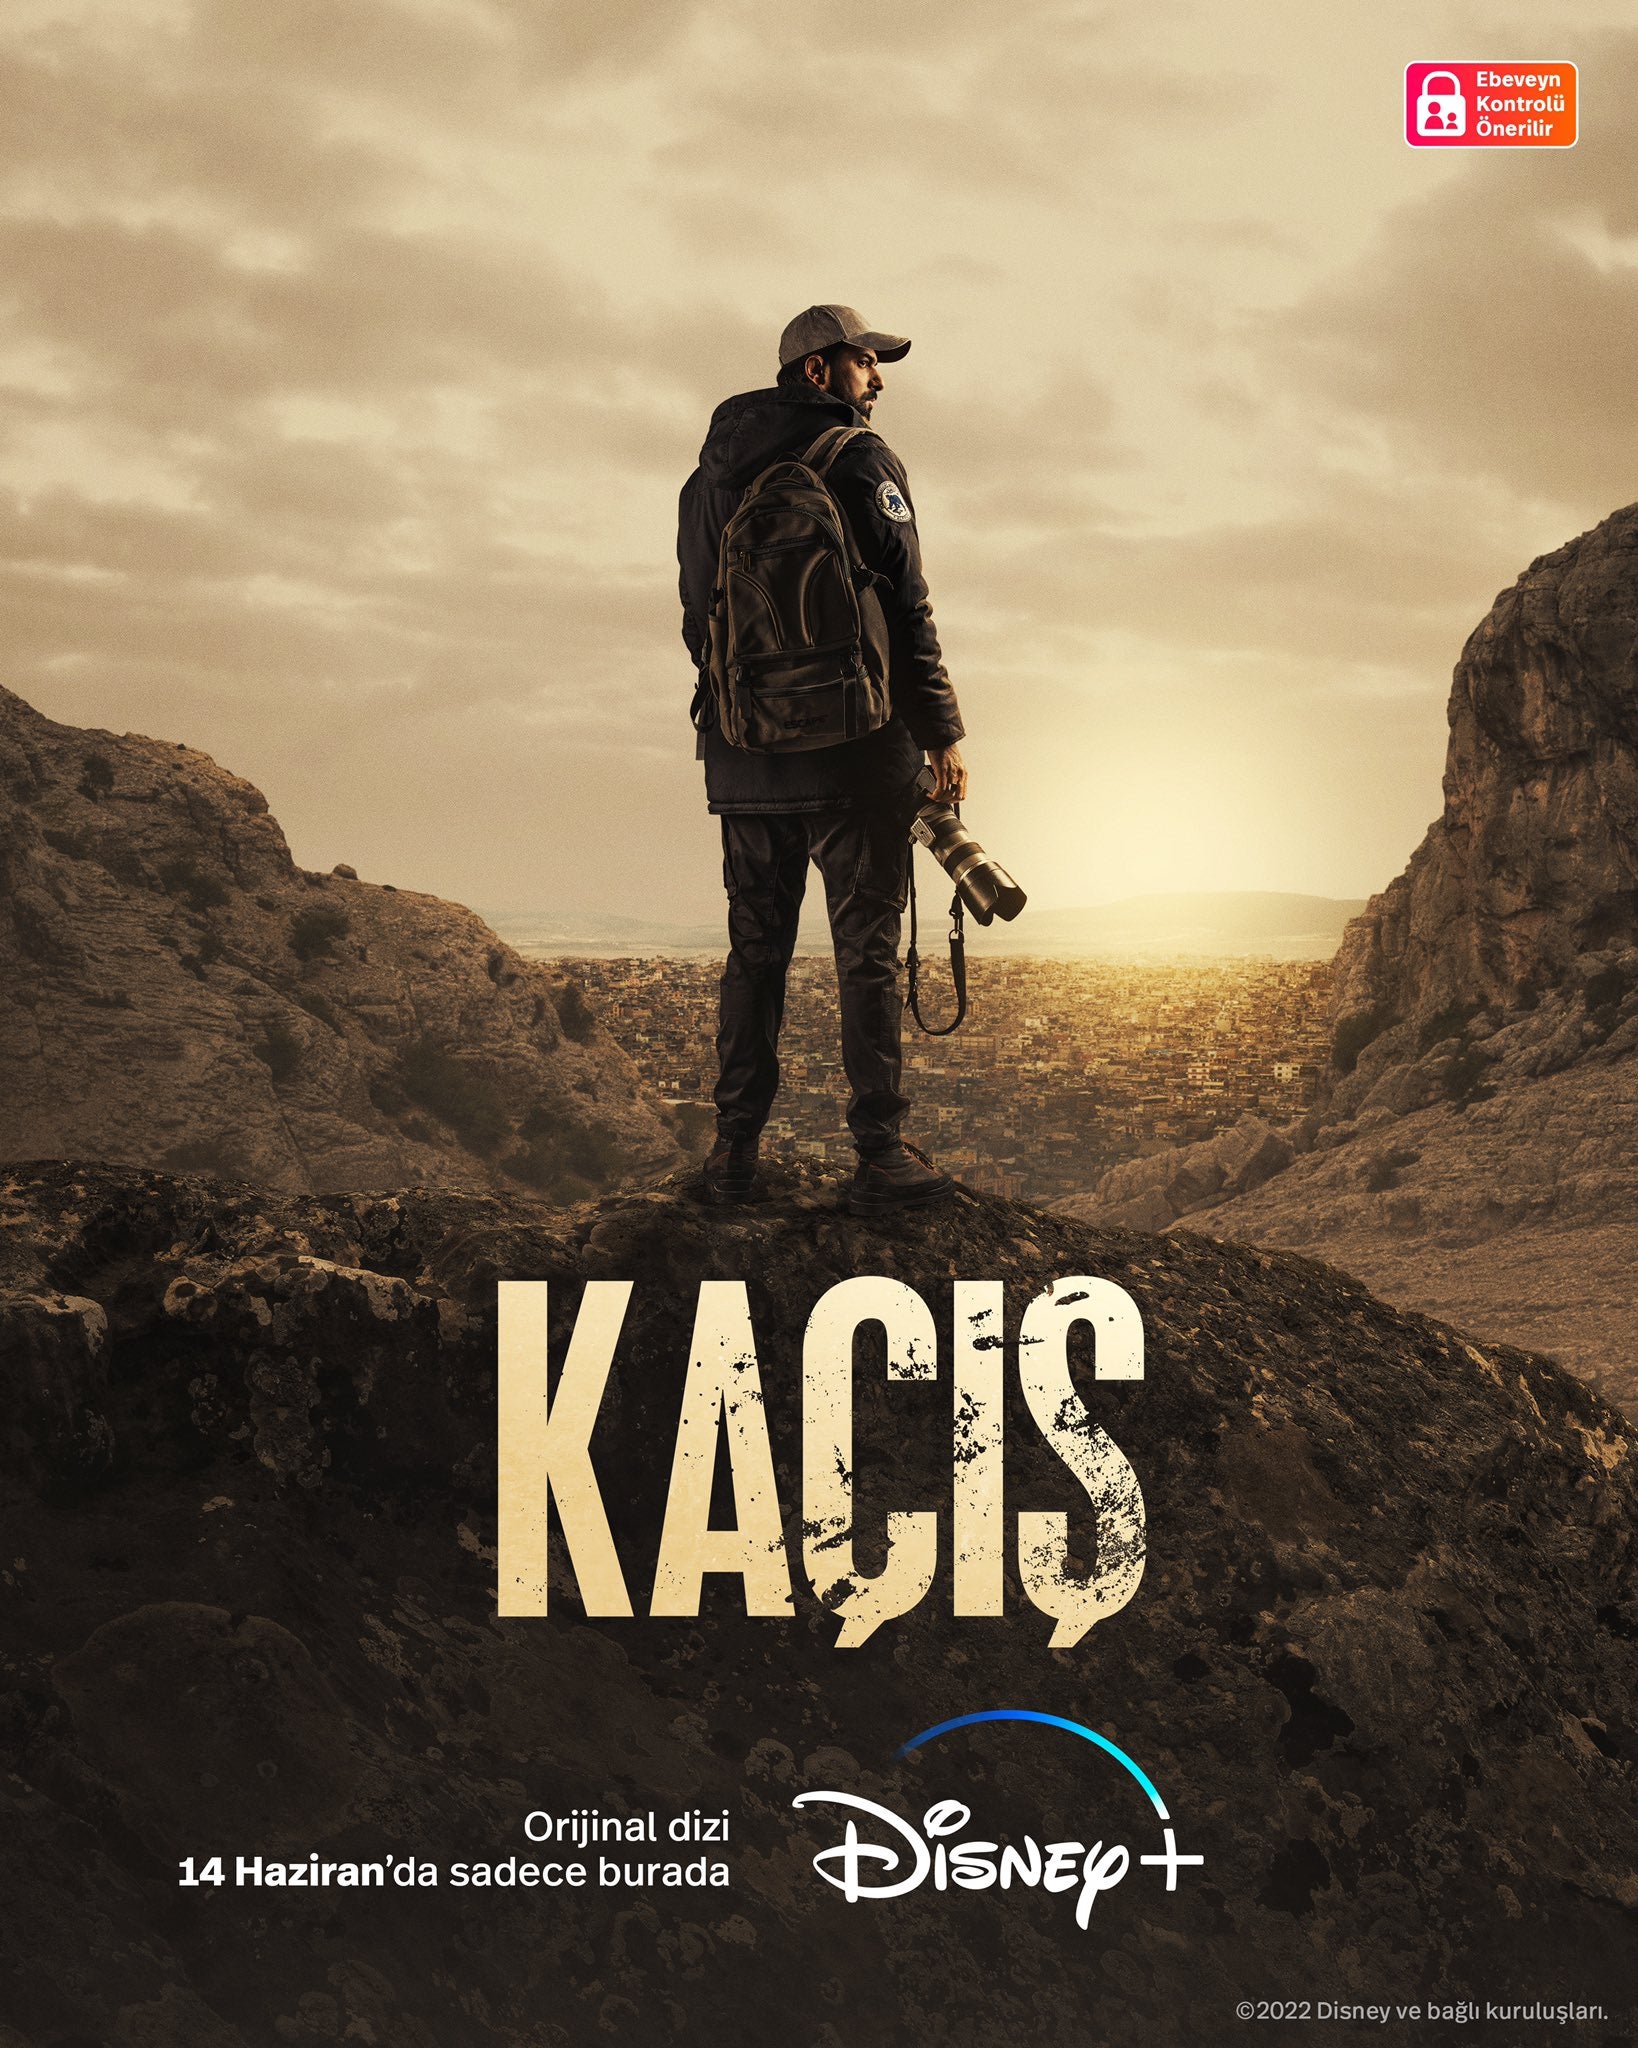 TV ratings for Escape (Kaçış 2022) in Spain. Disney+ TV series